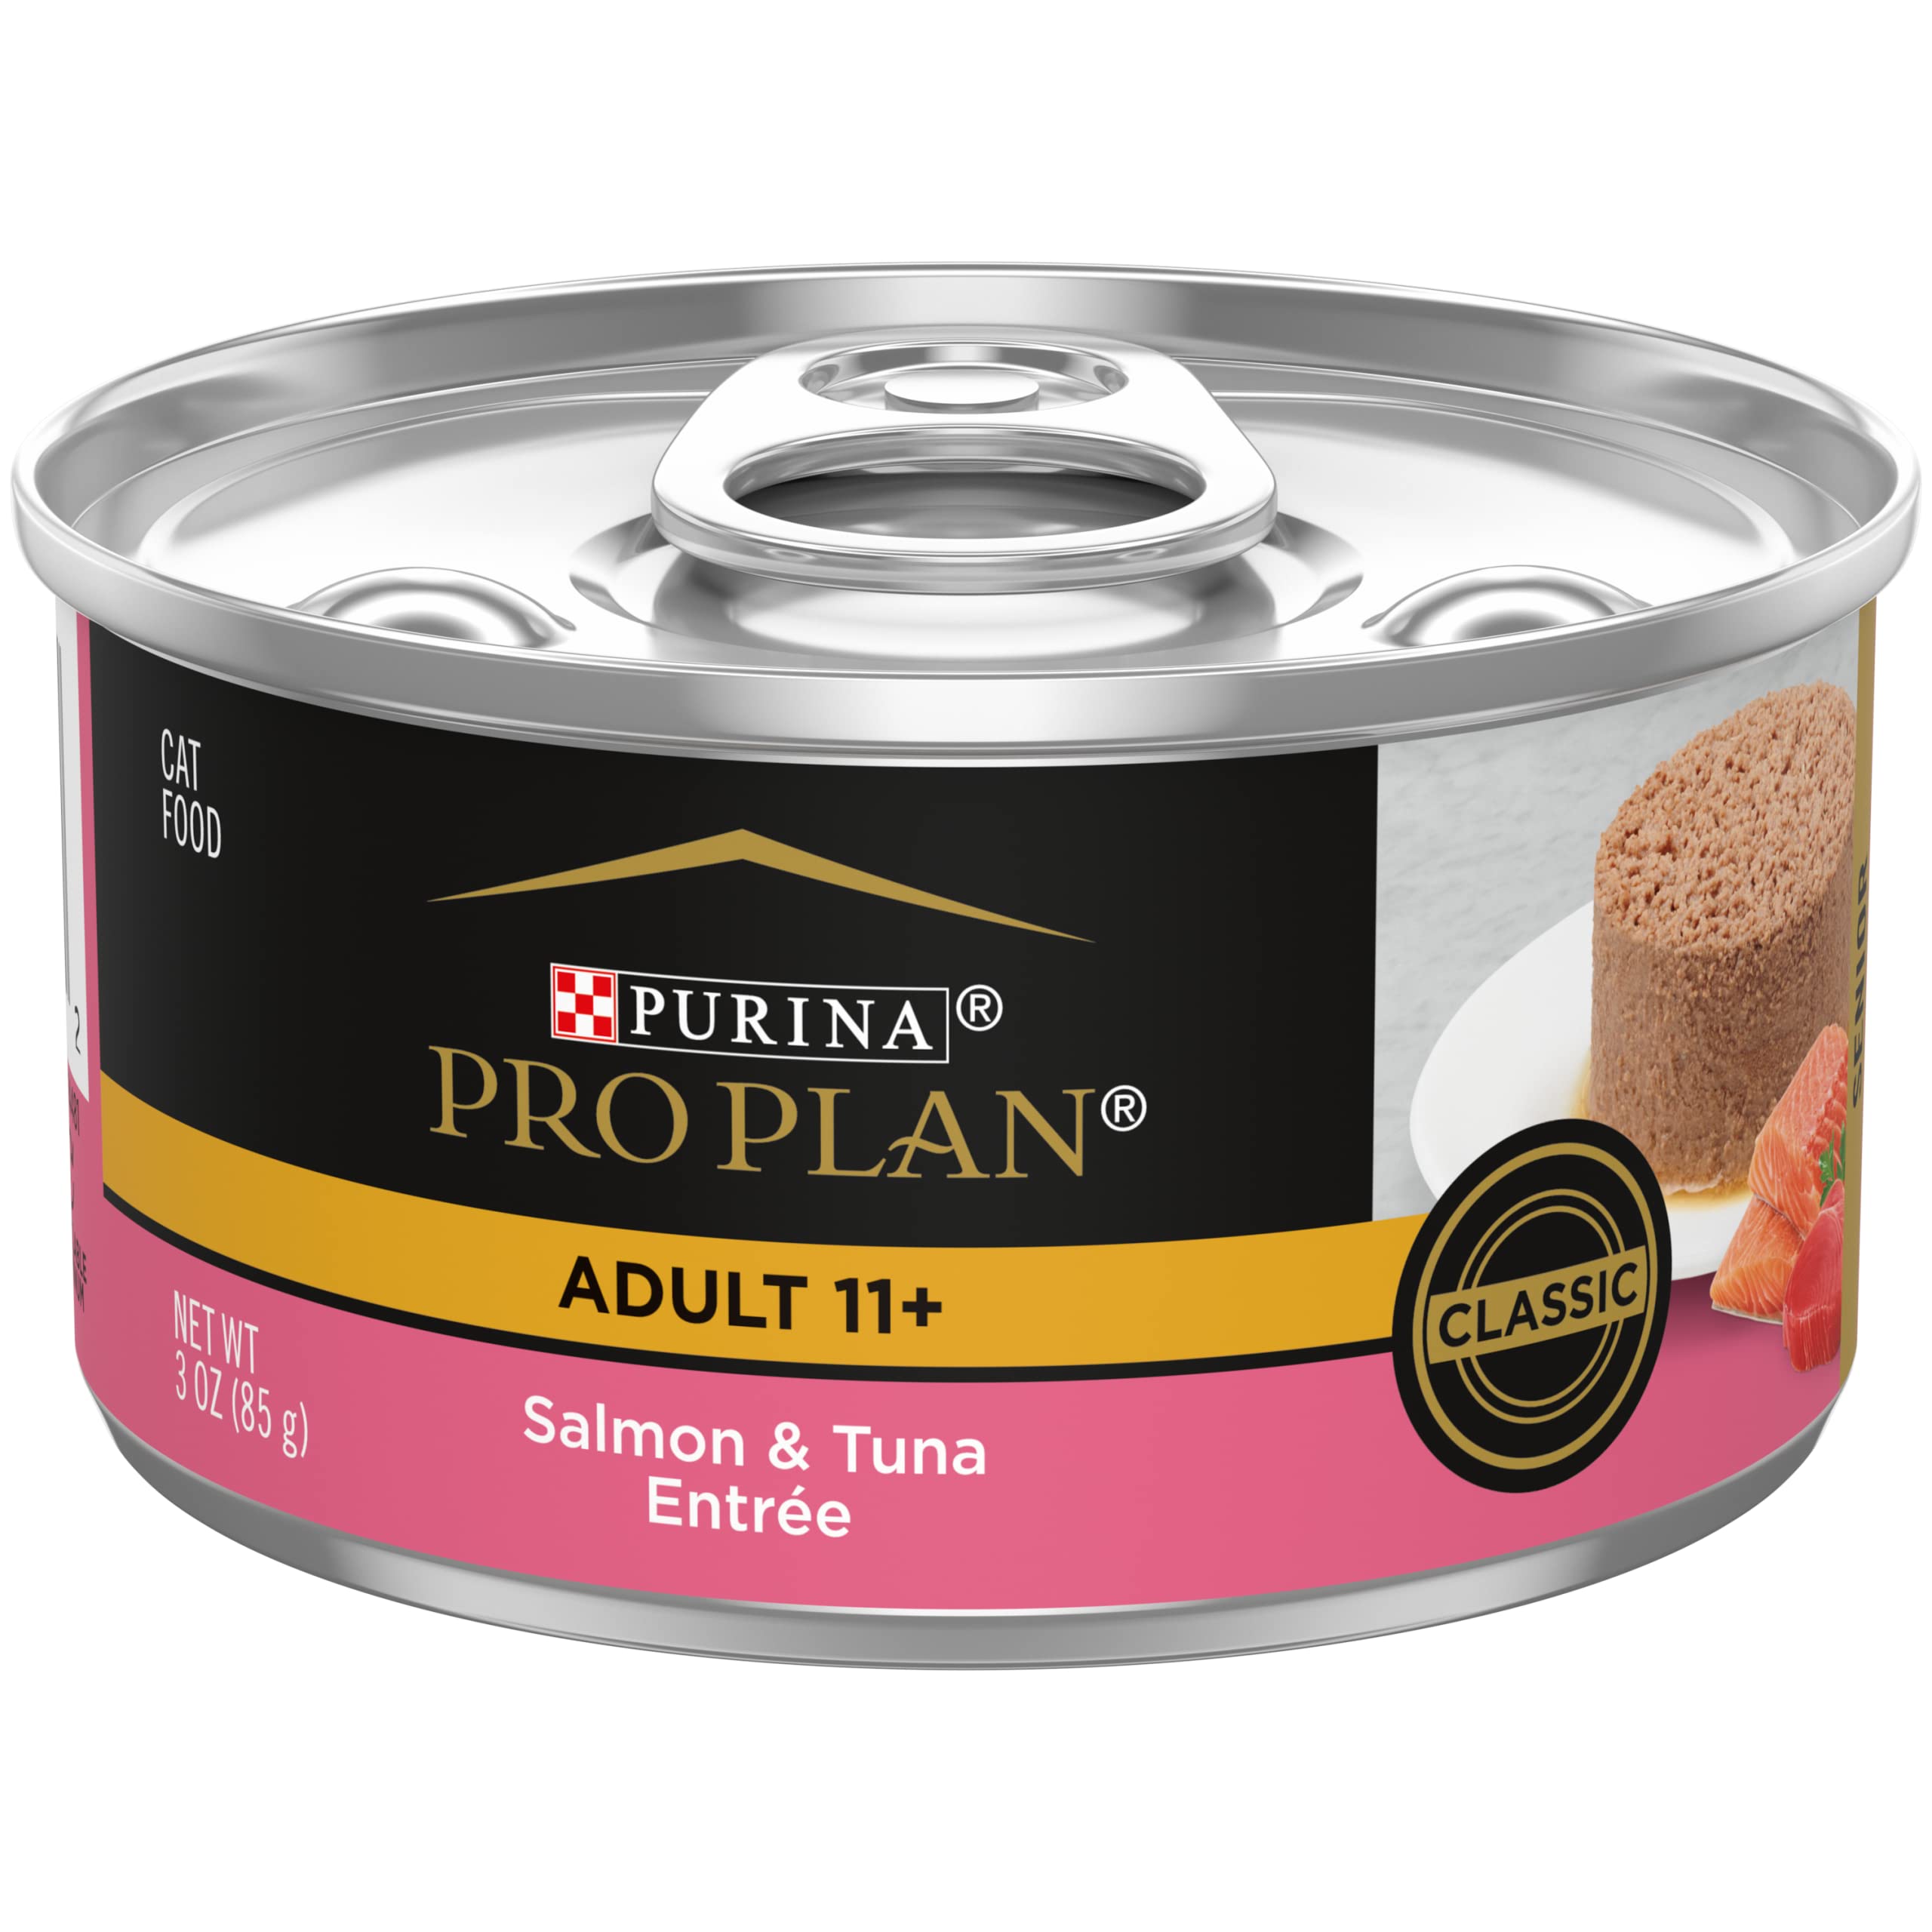 Purina Pro Plan Focus Adult 11+ Classic Salmon and Tuna Entree